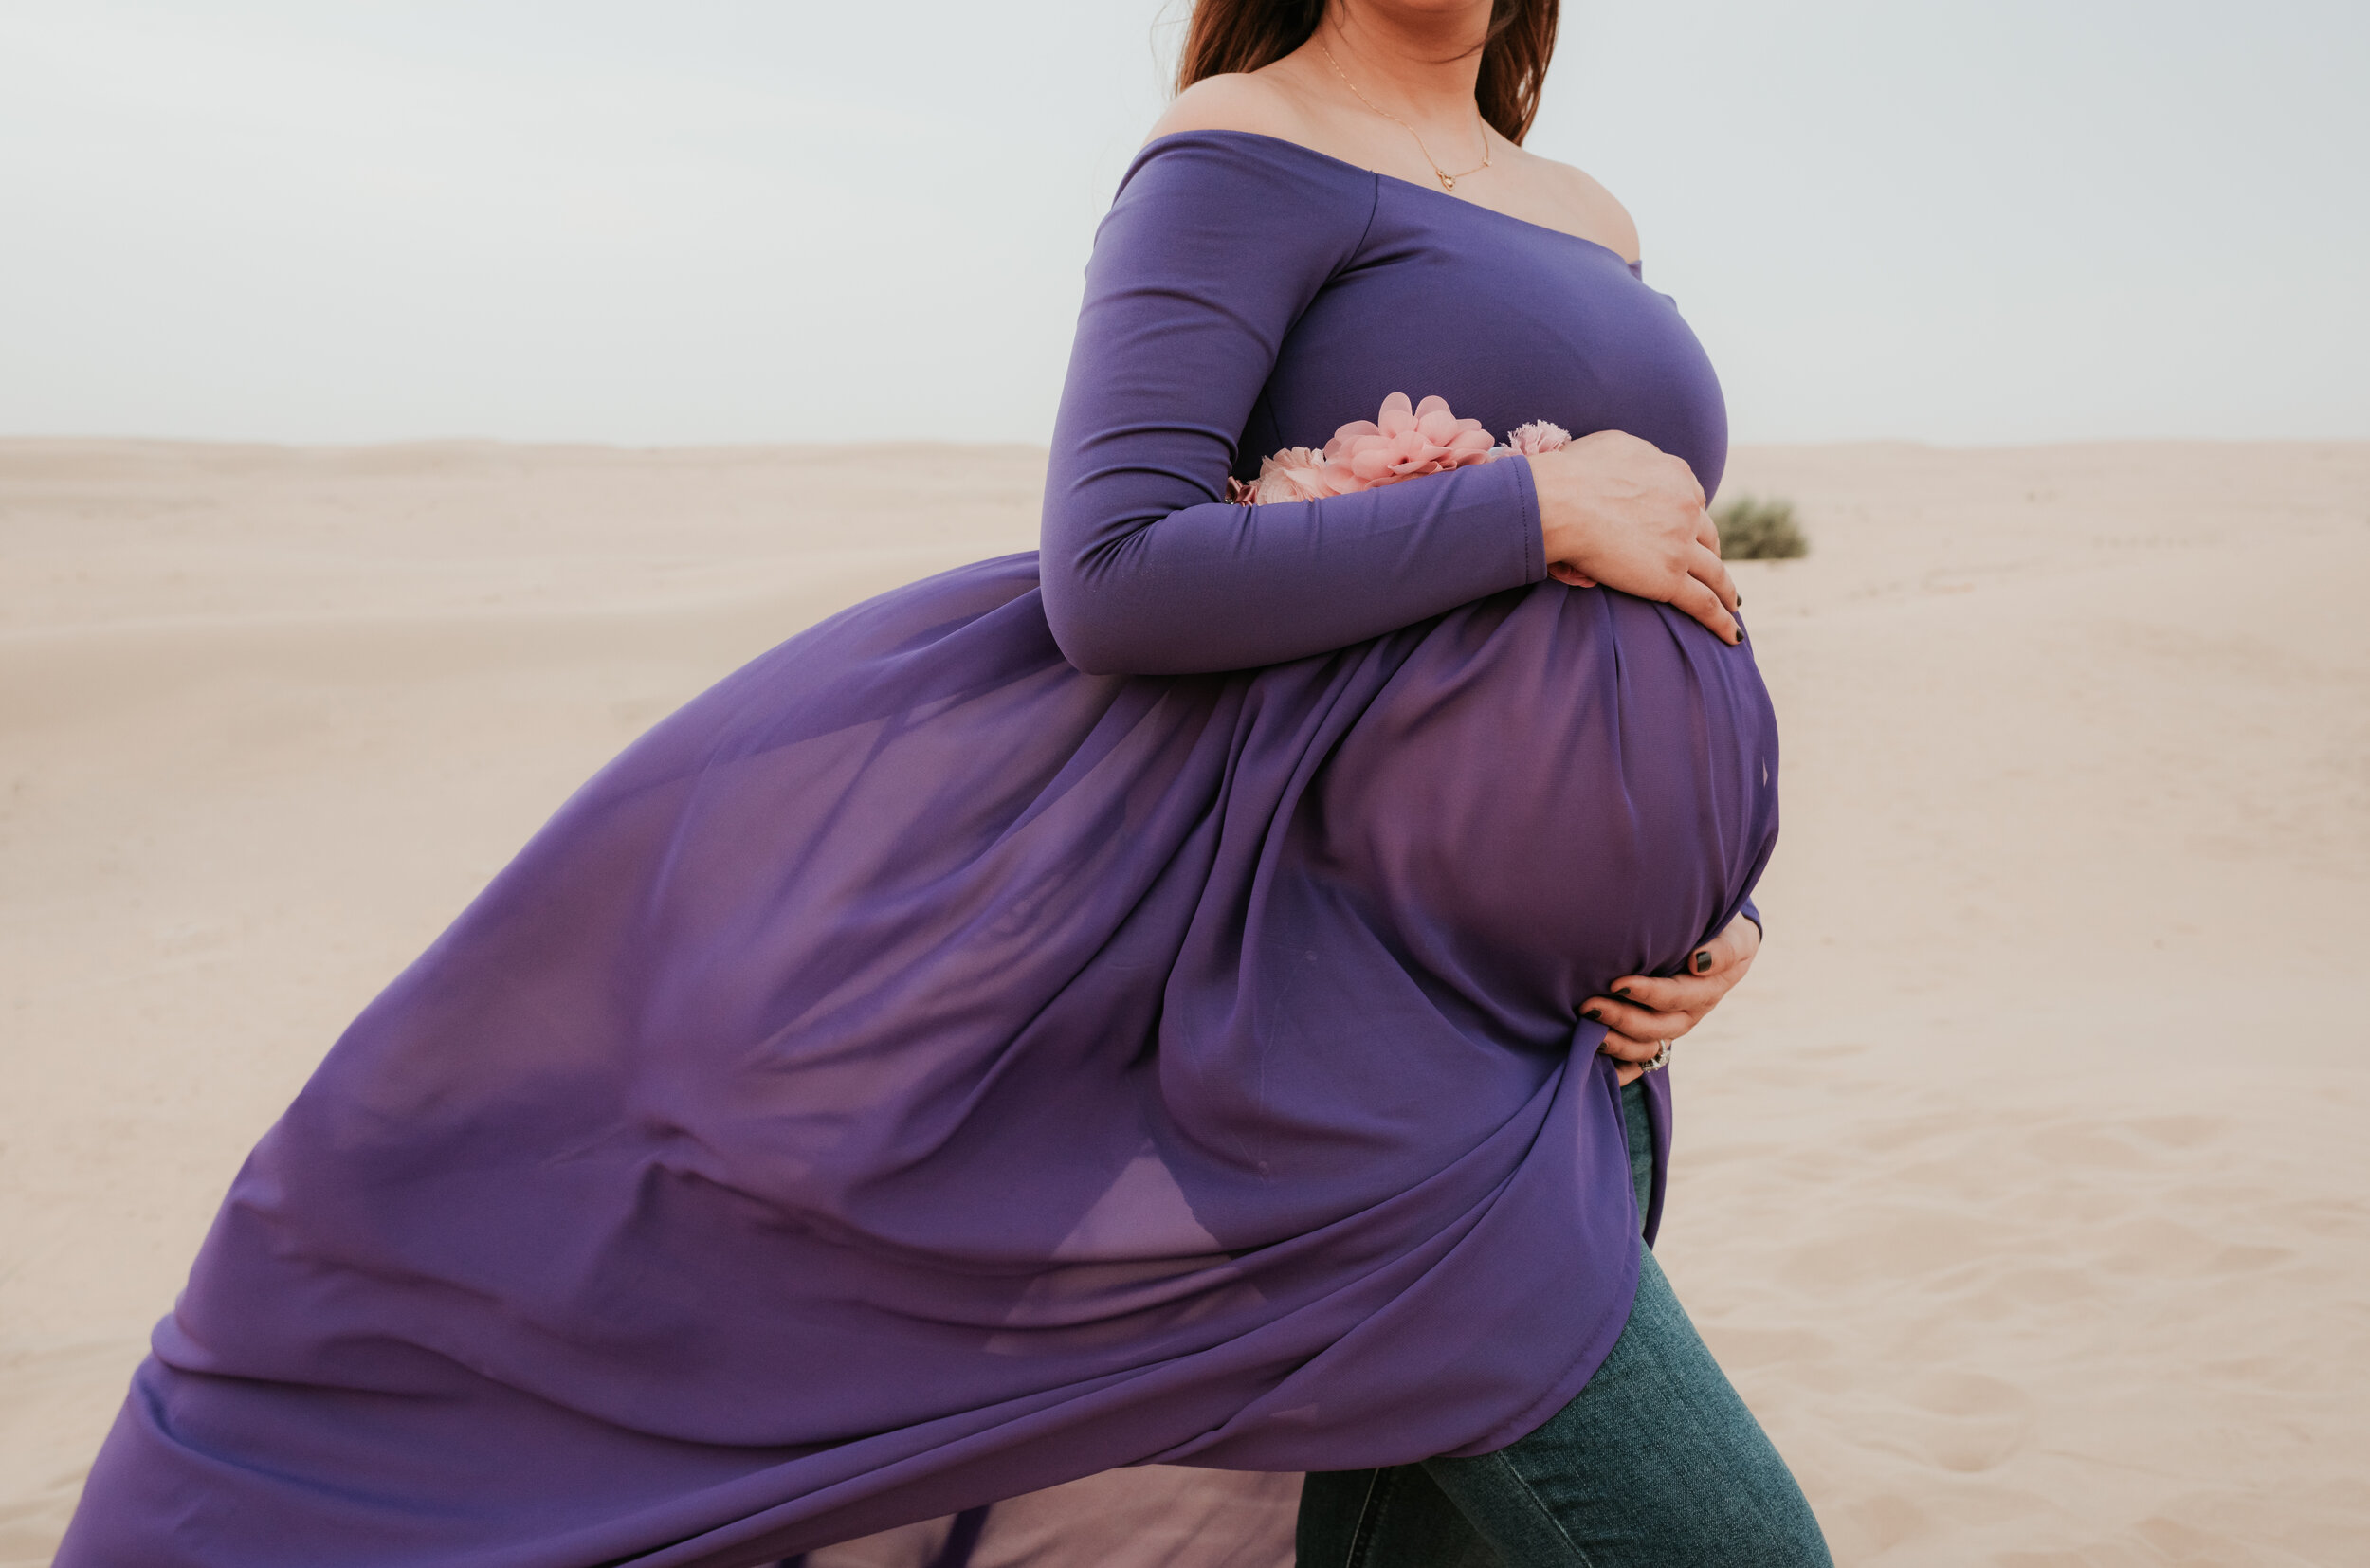 Lana-Photographs-Dubai-Maternity-Photographer-Fatima-FR-56.jpg